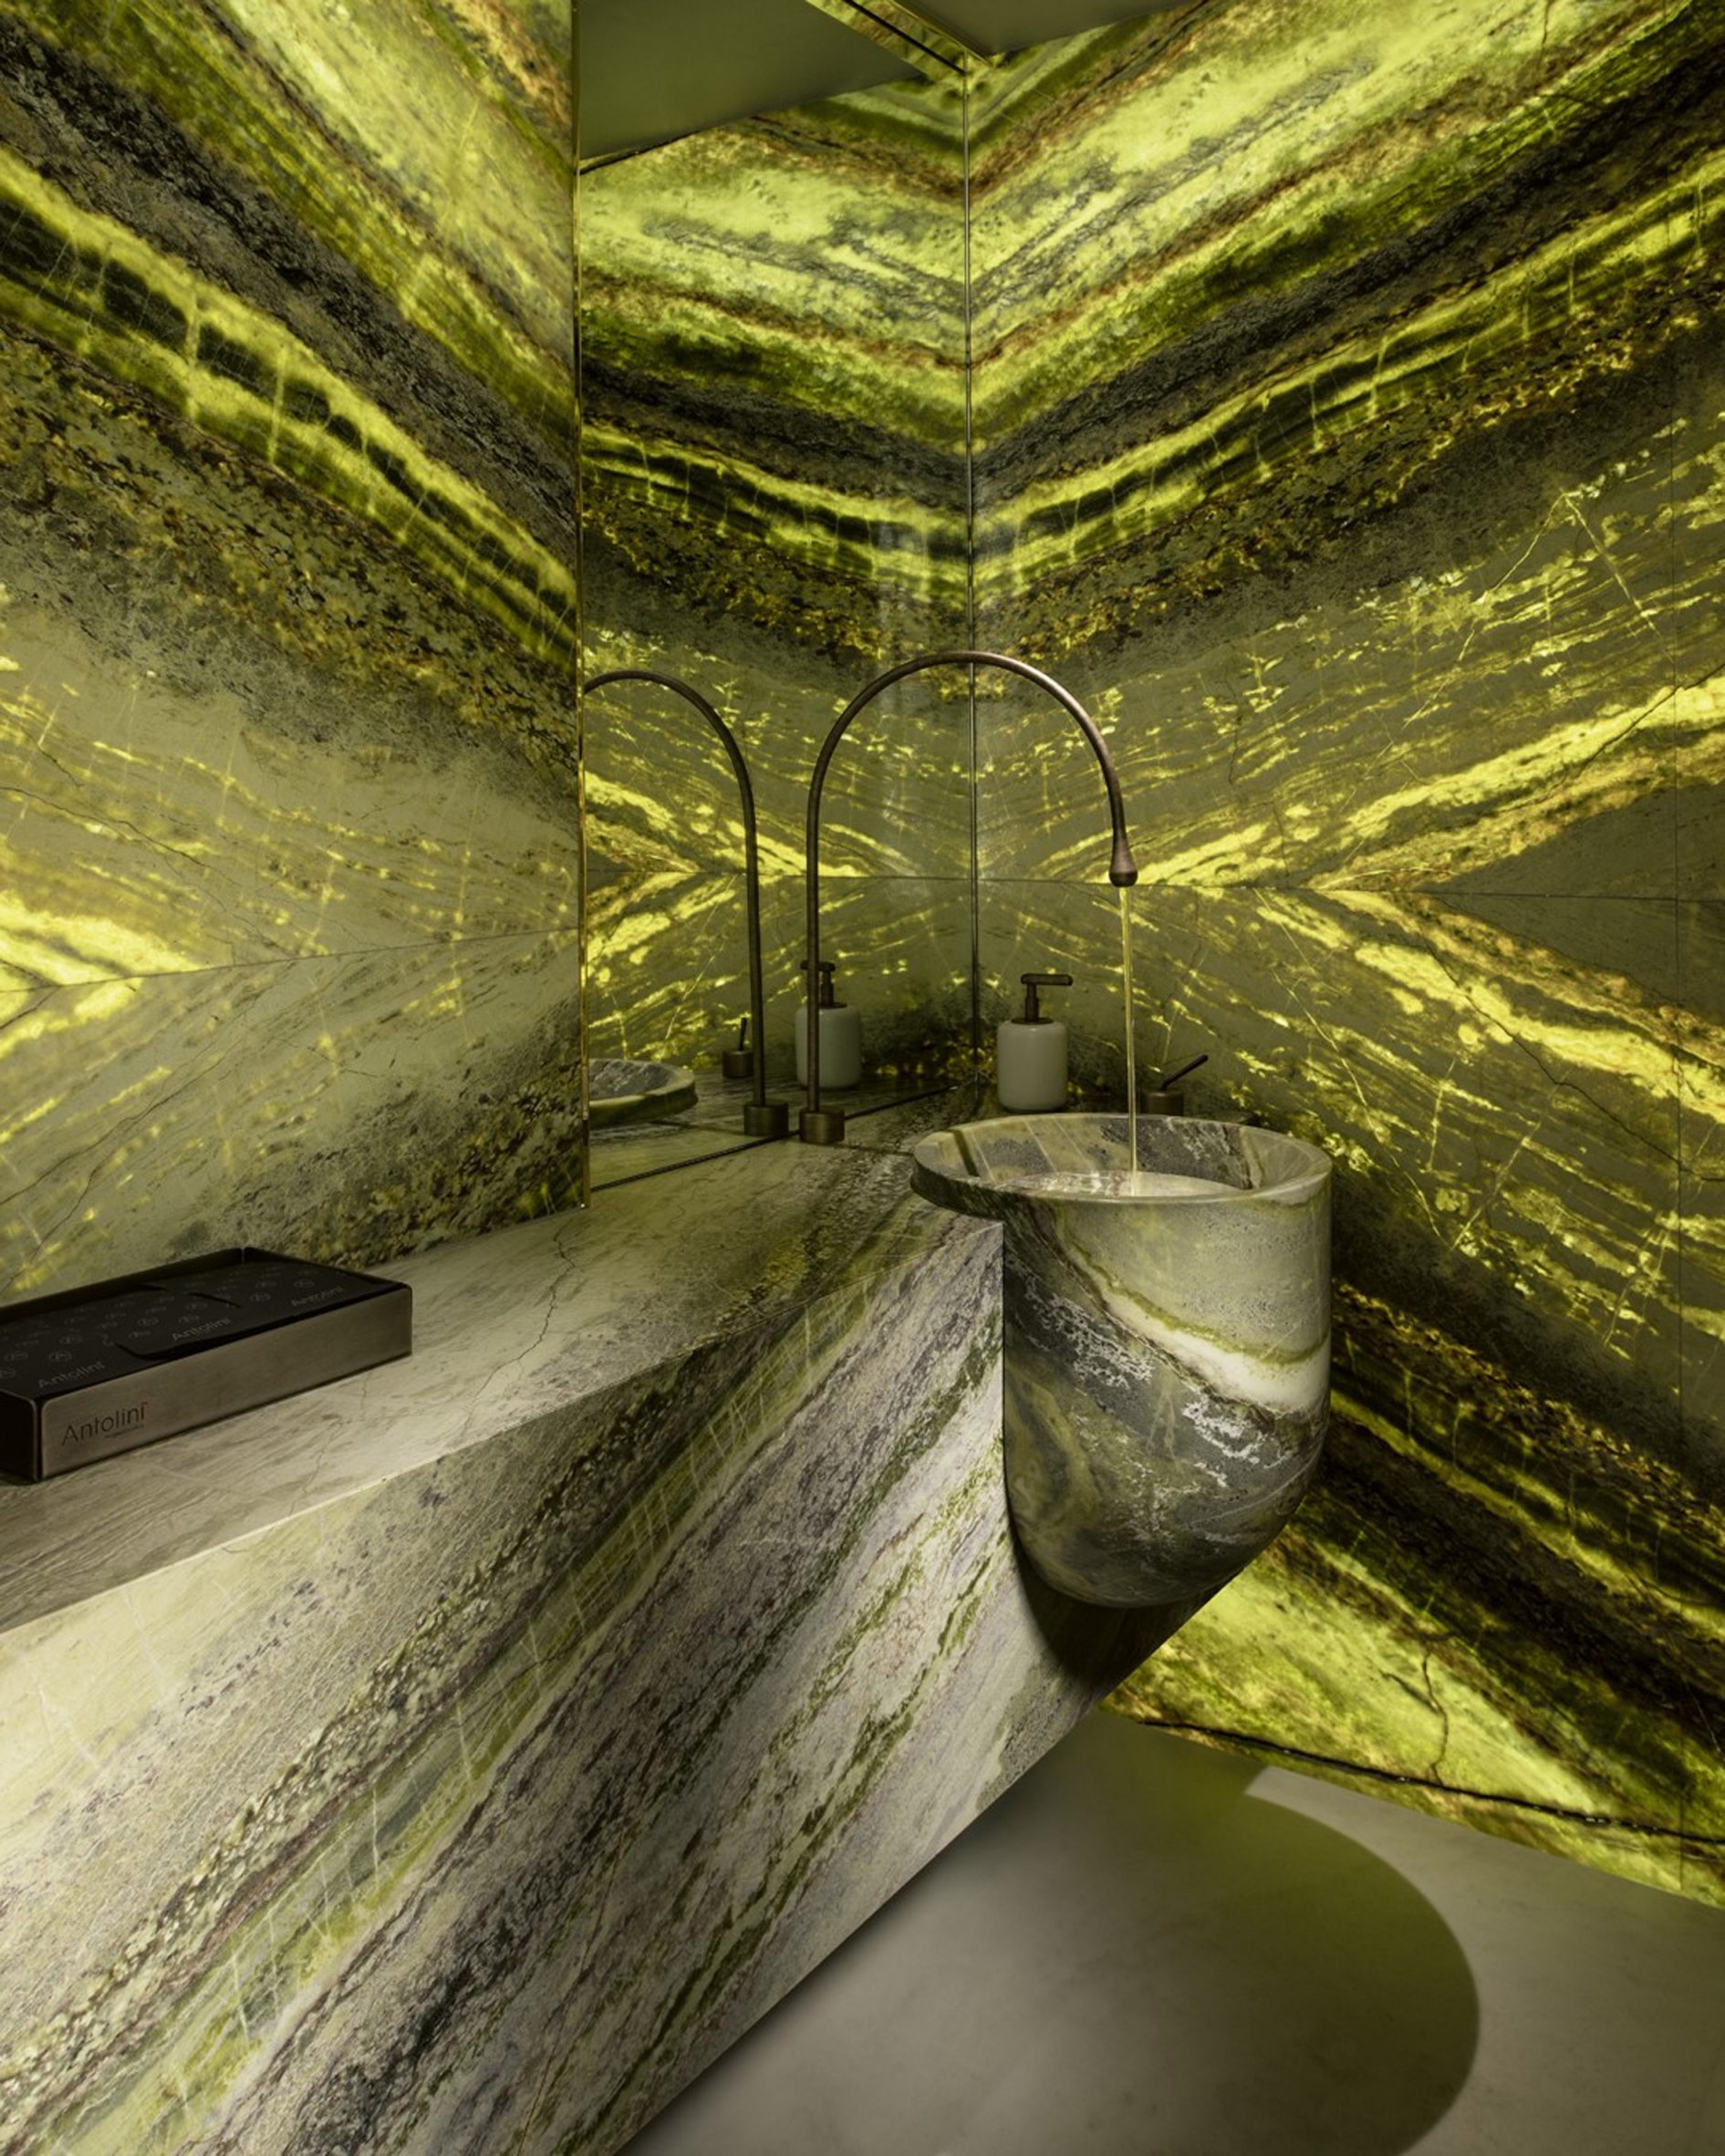 Irish Green marble by Antolini used on bathroom walls, sink and vanity unit